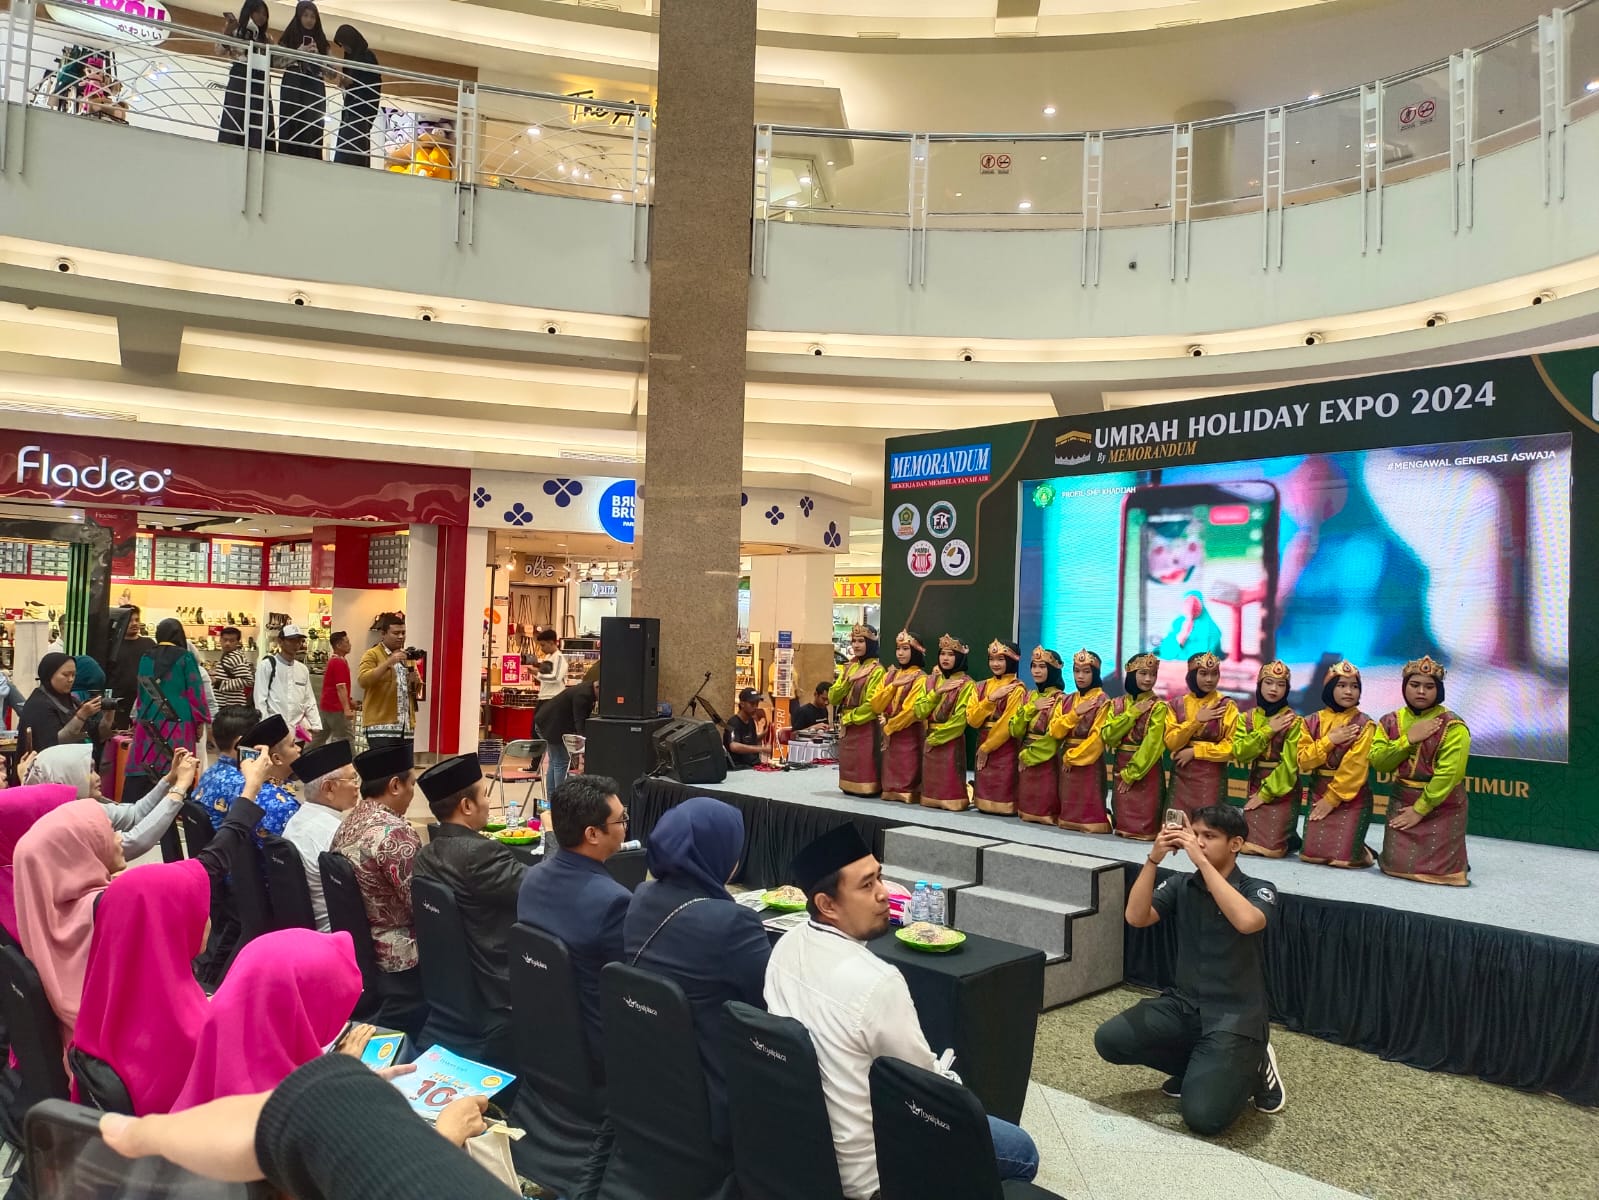 Tari Saman dan Group Al Banjari SMP Khadijah Meriahkan Memorandum Holiday Expo 2024